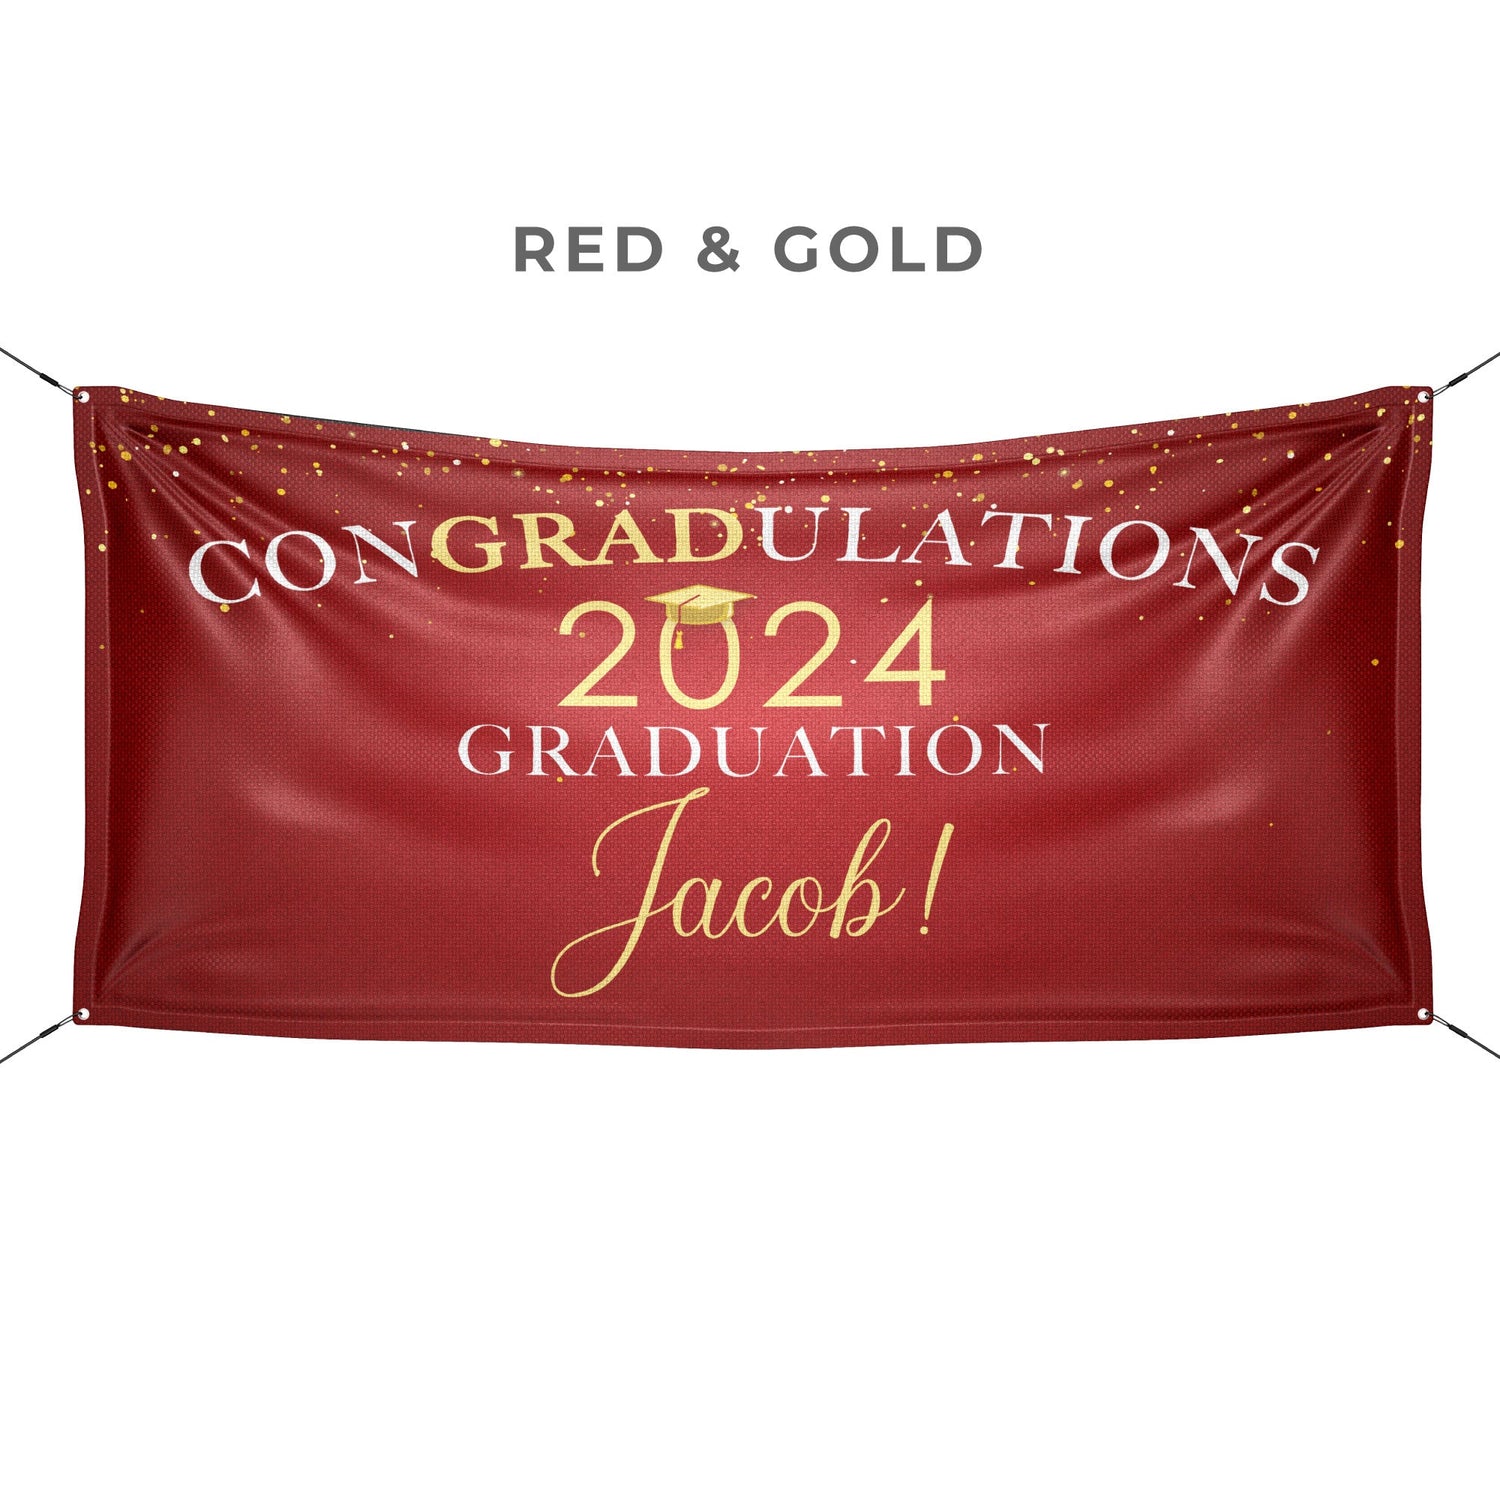 Grad Banners & Gifts - Congrats Graduation Banner